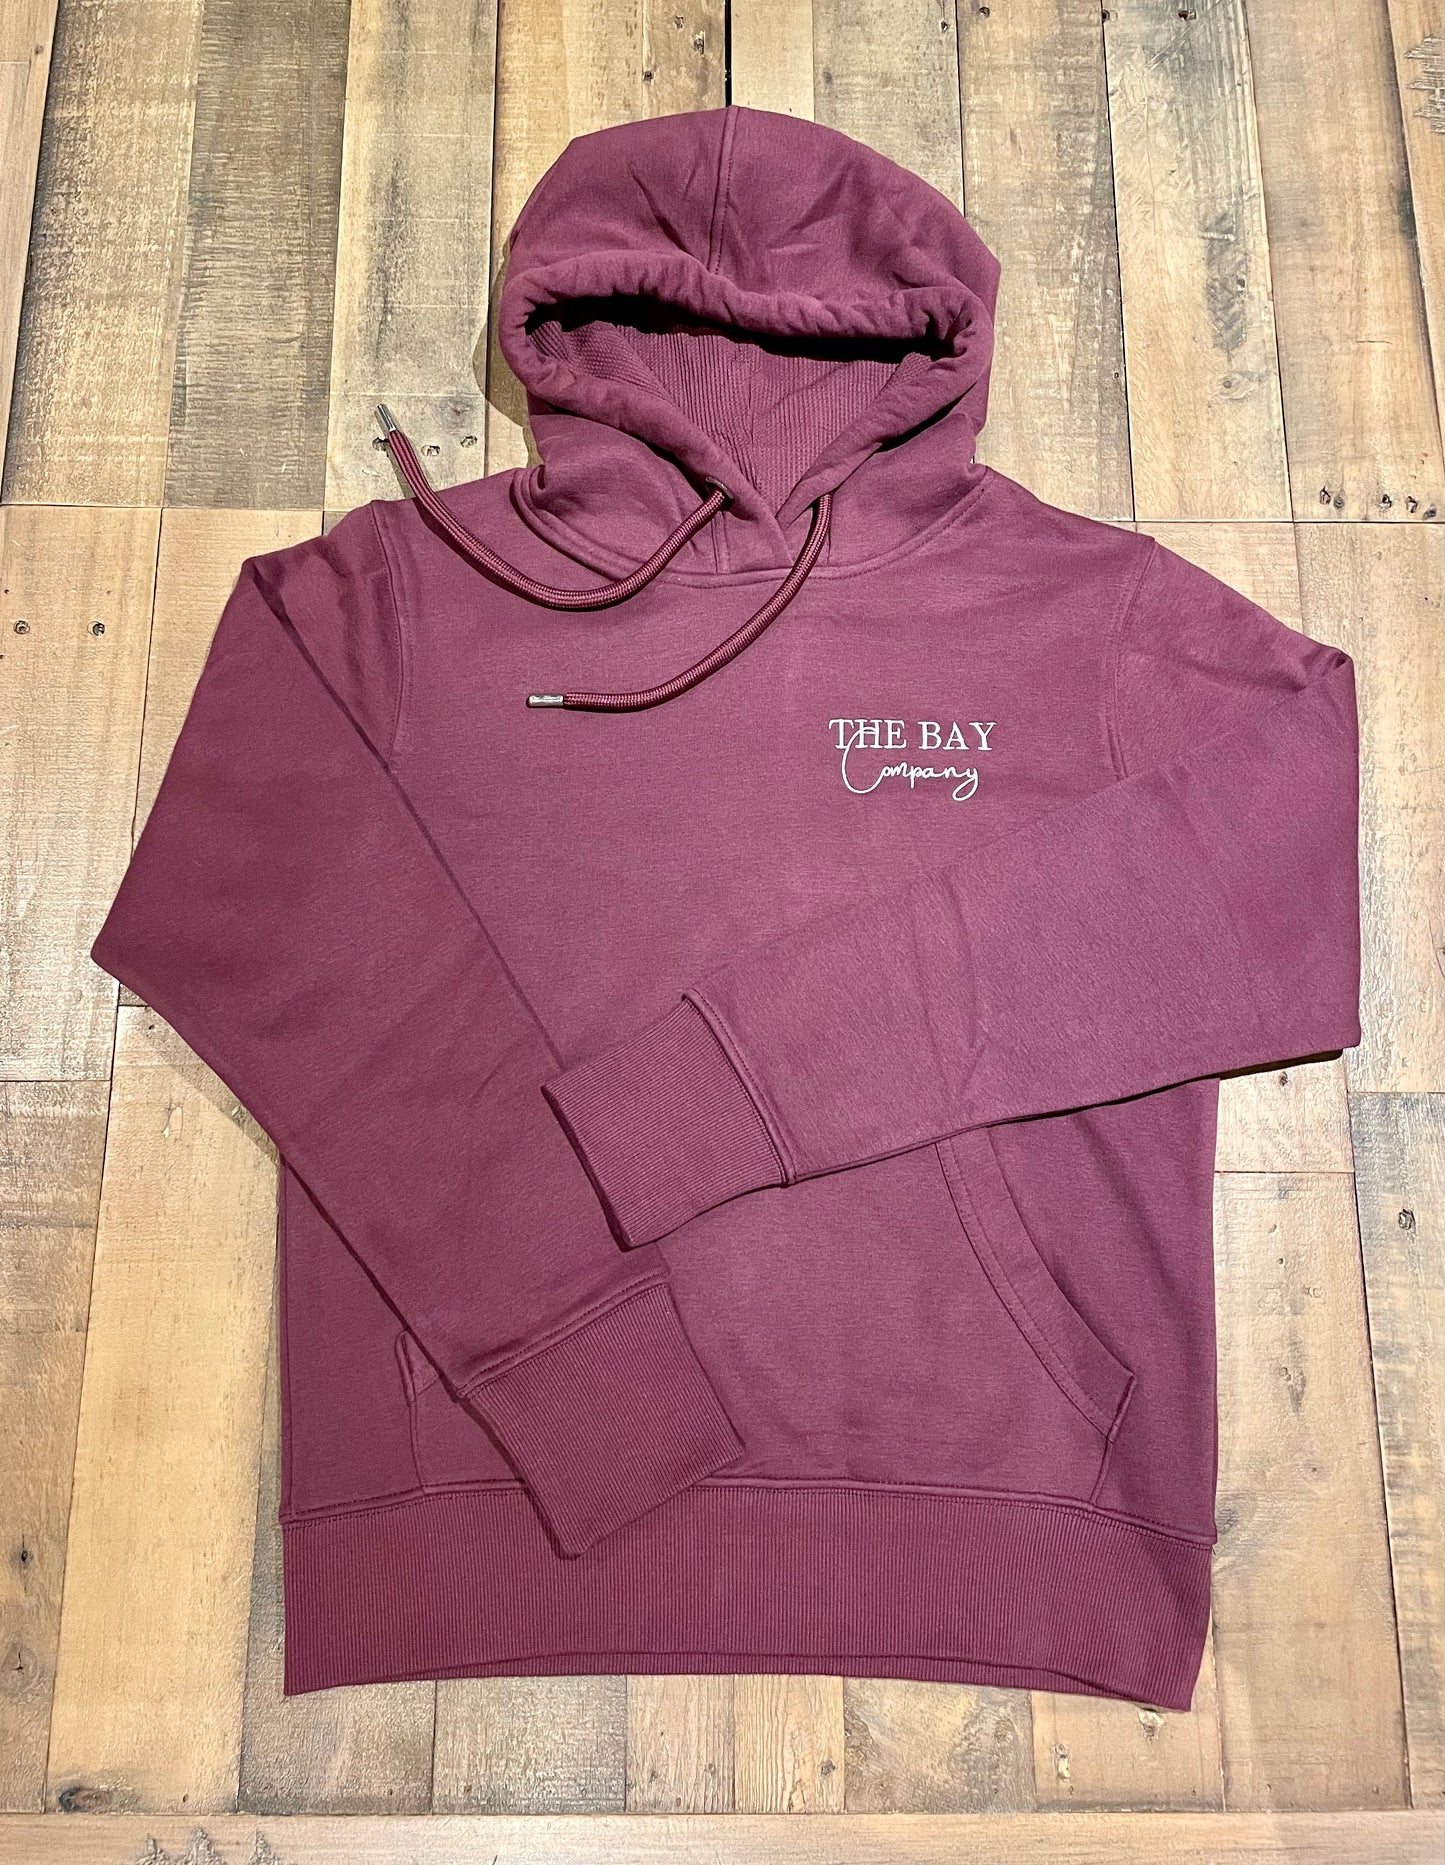 The women’s burgundy Robin Hood’s Bay hoodie from The Bay Company